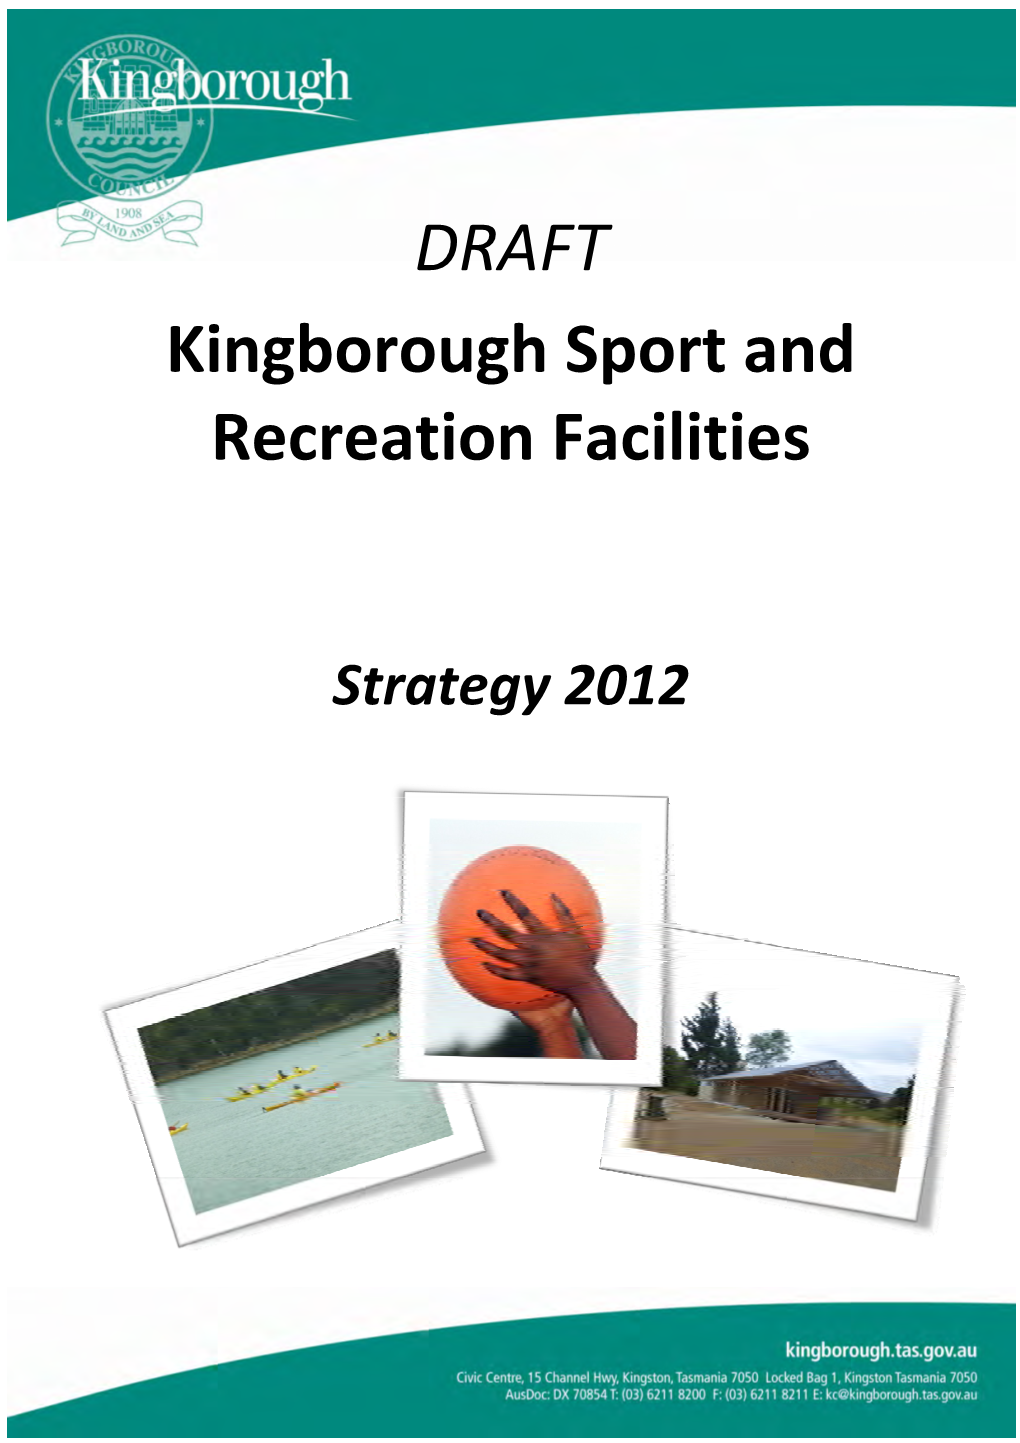 DRAFT Kingborough Sport and Recreation Facilities